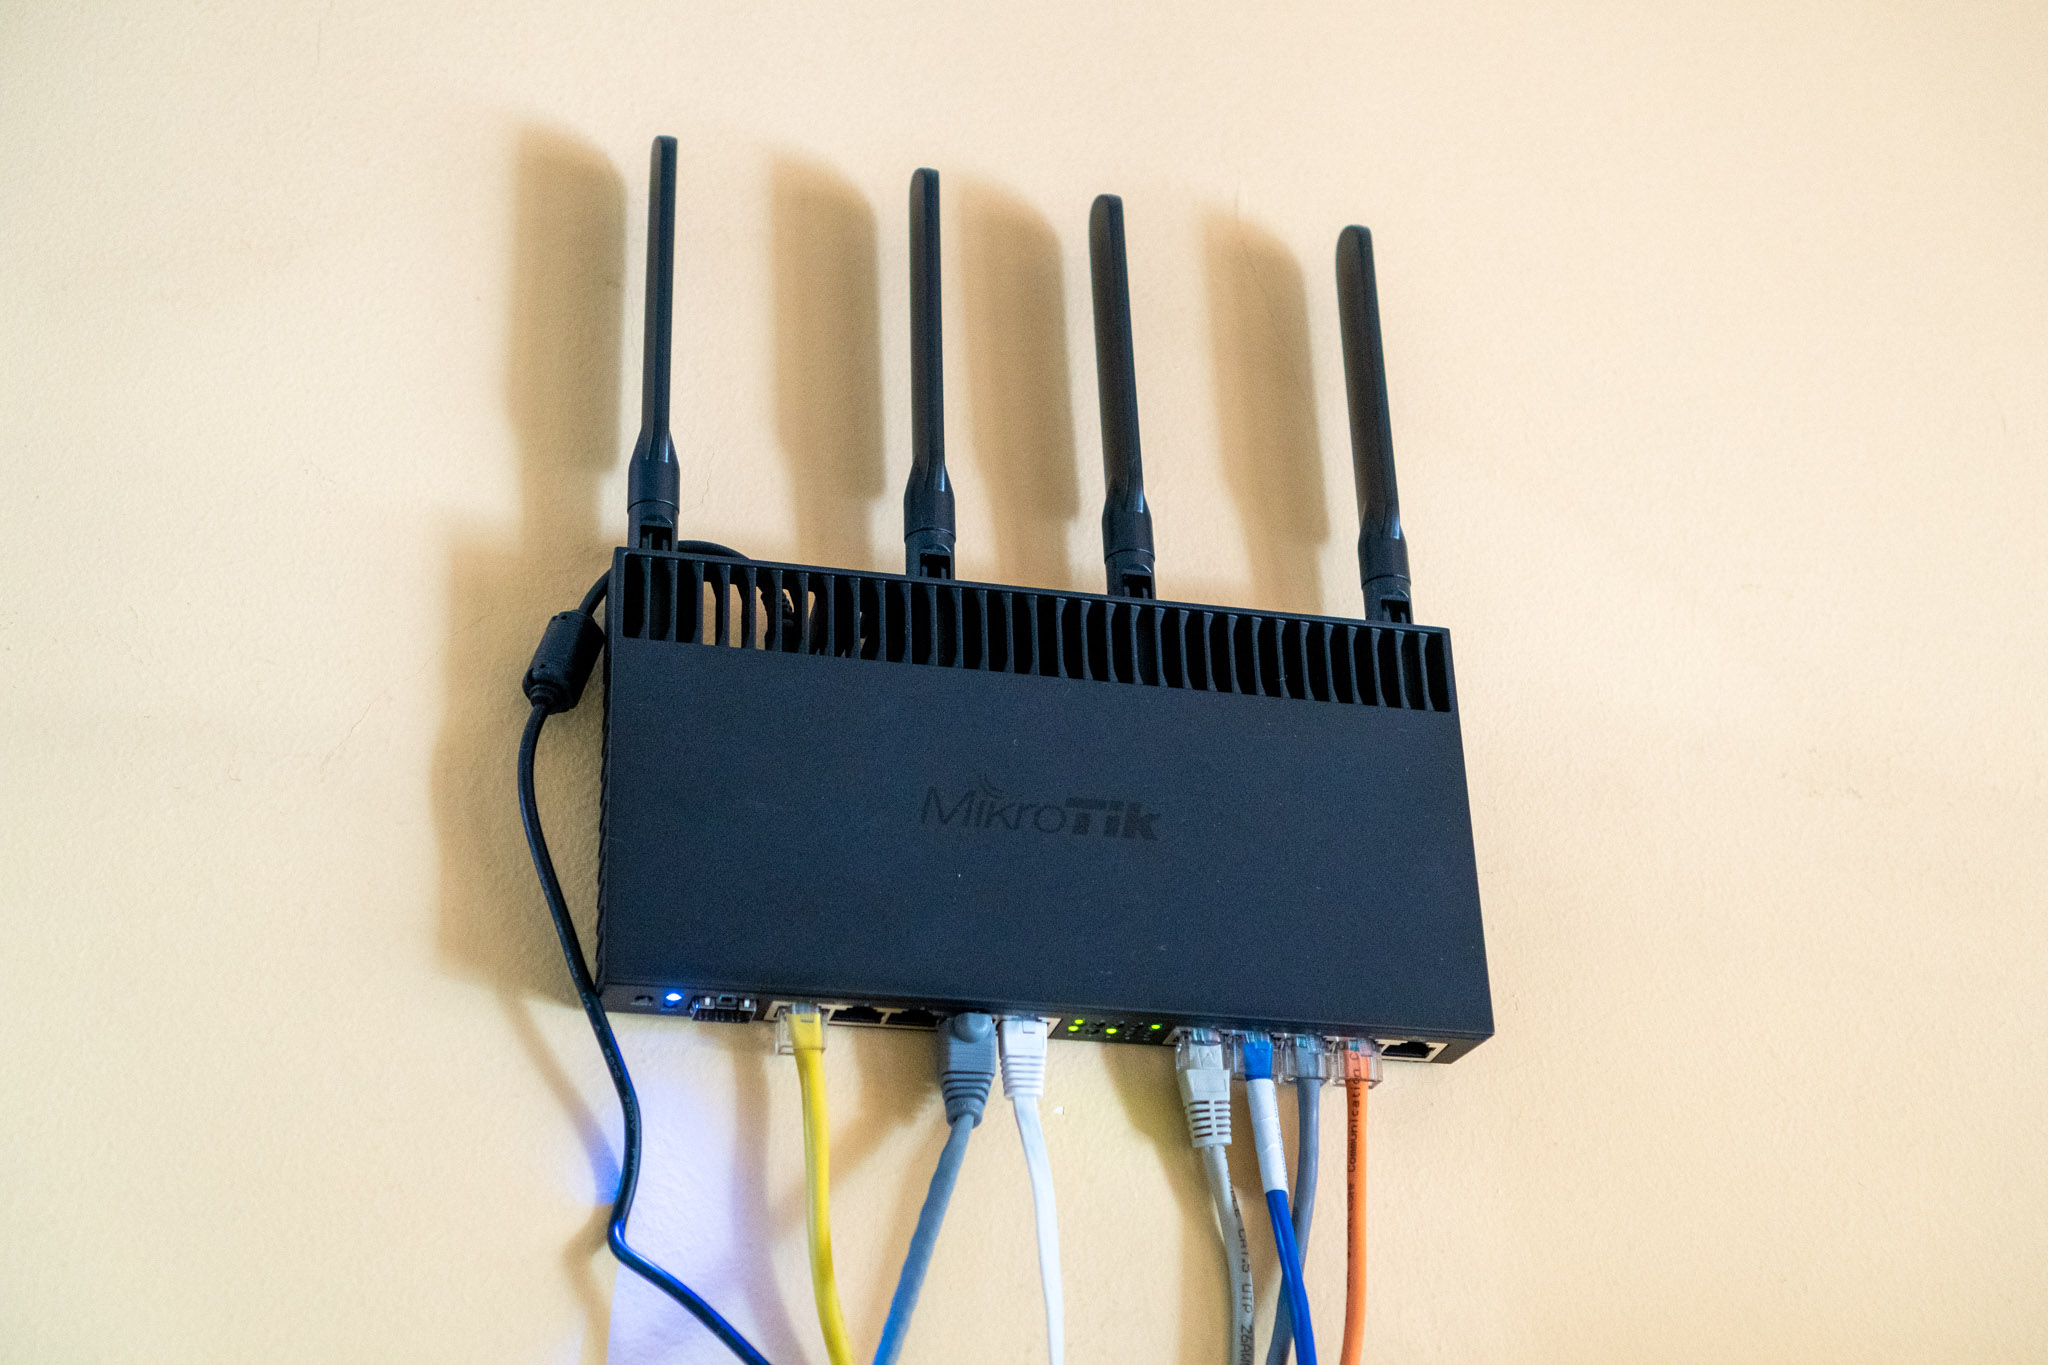 mikrotik routeros wireless repeater